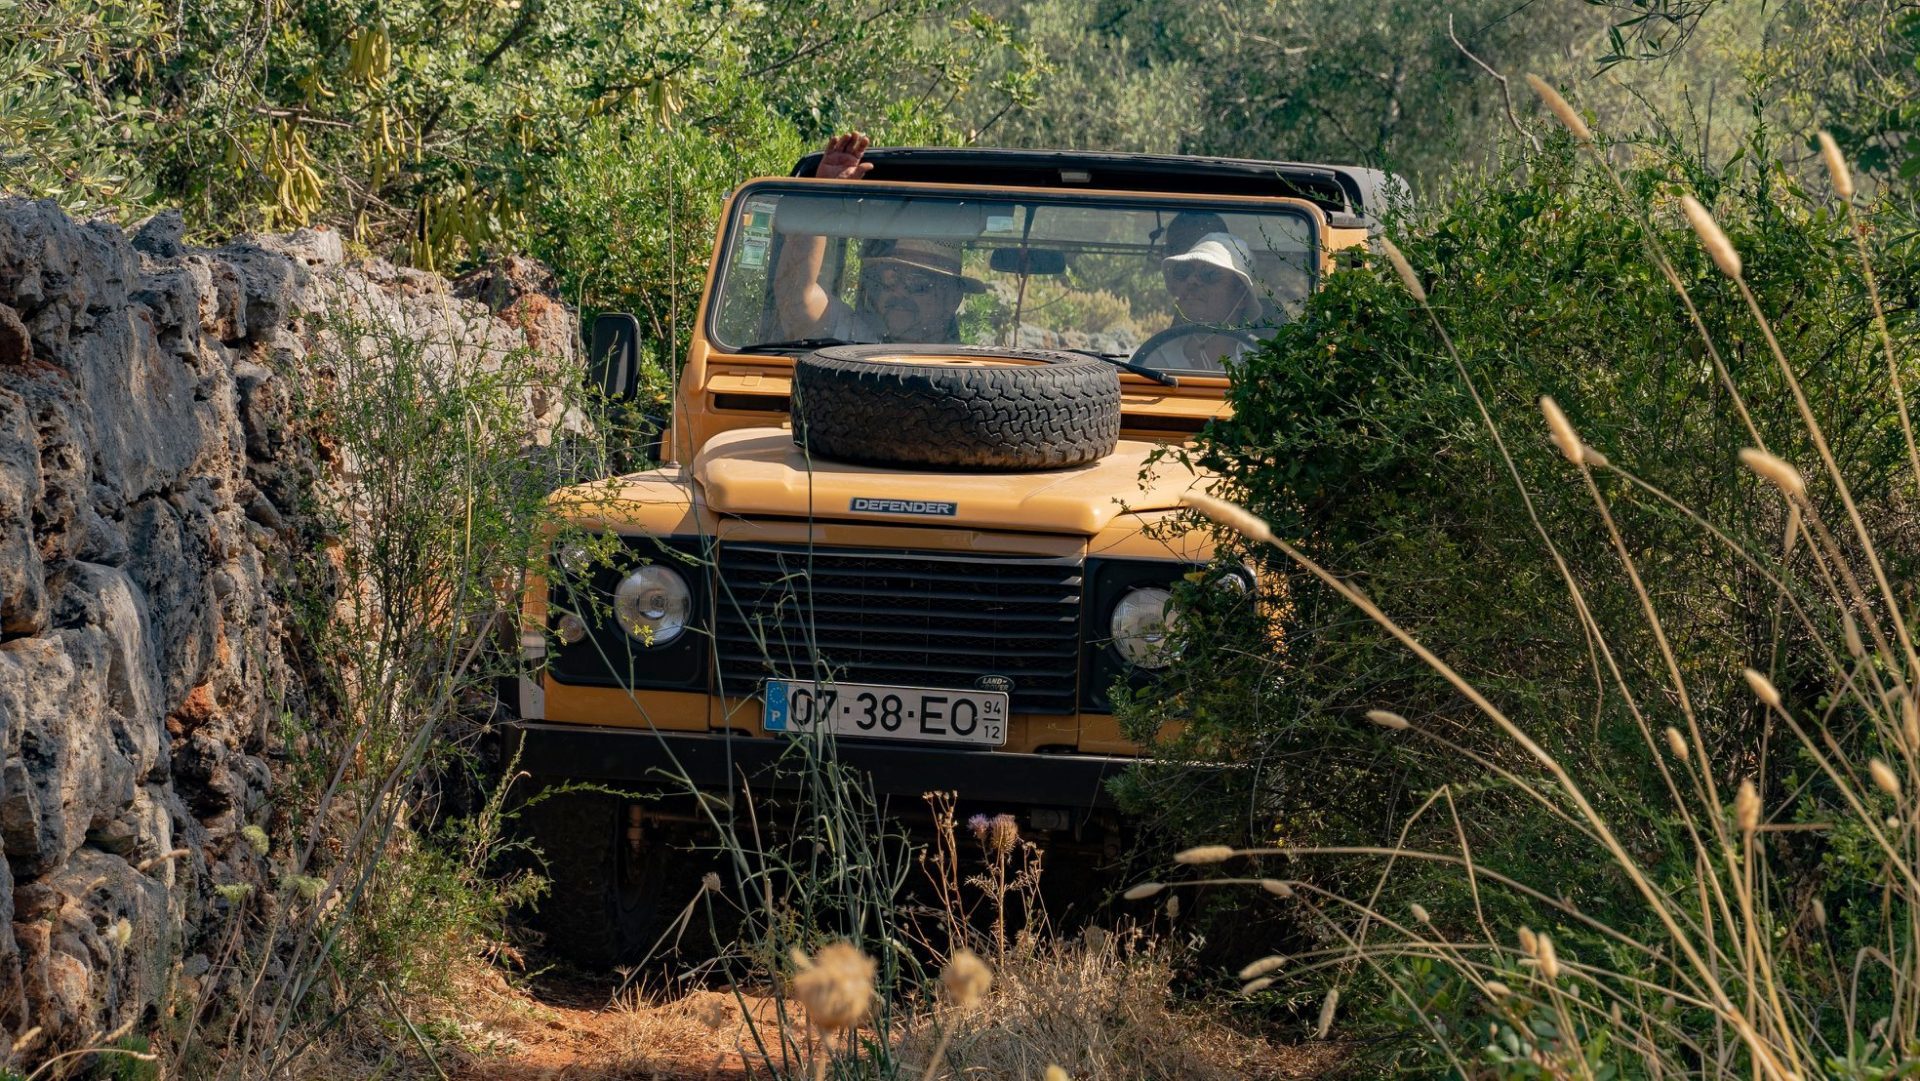 Jeep Safari Privado de Meio Dia Albufeira